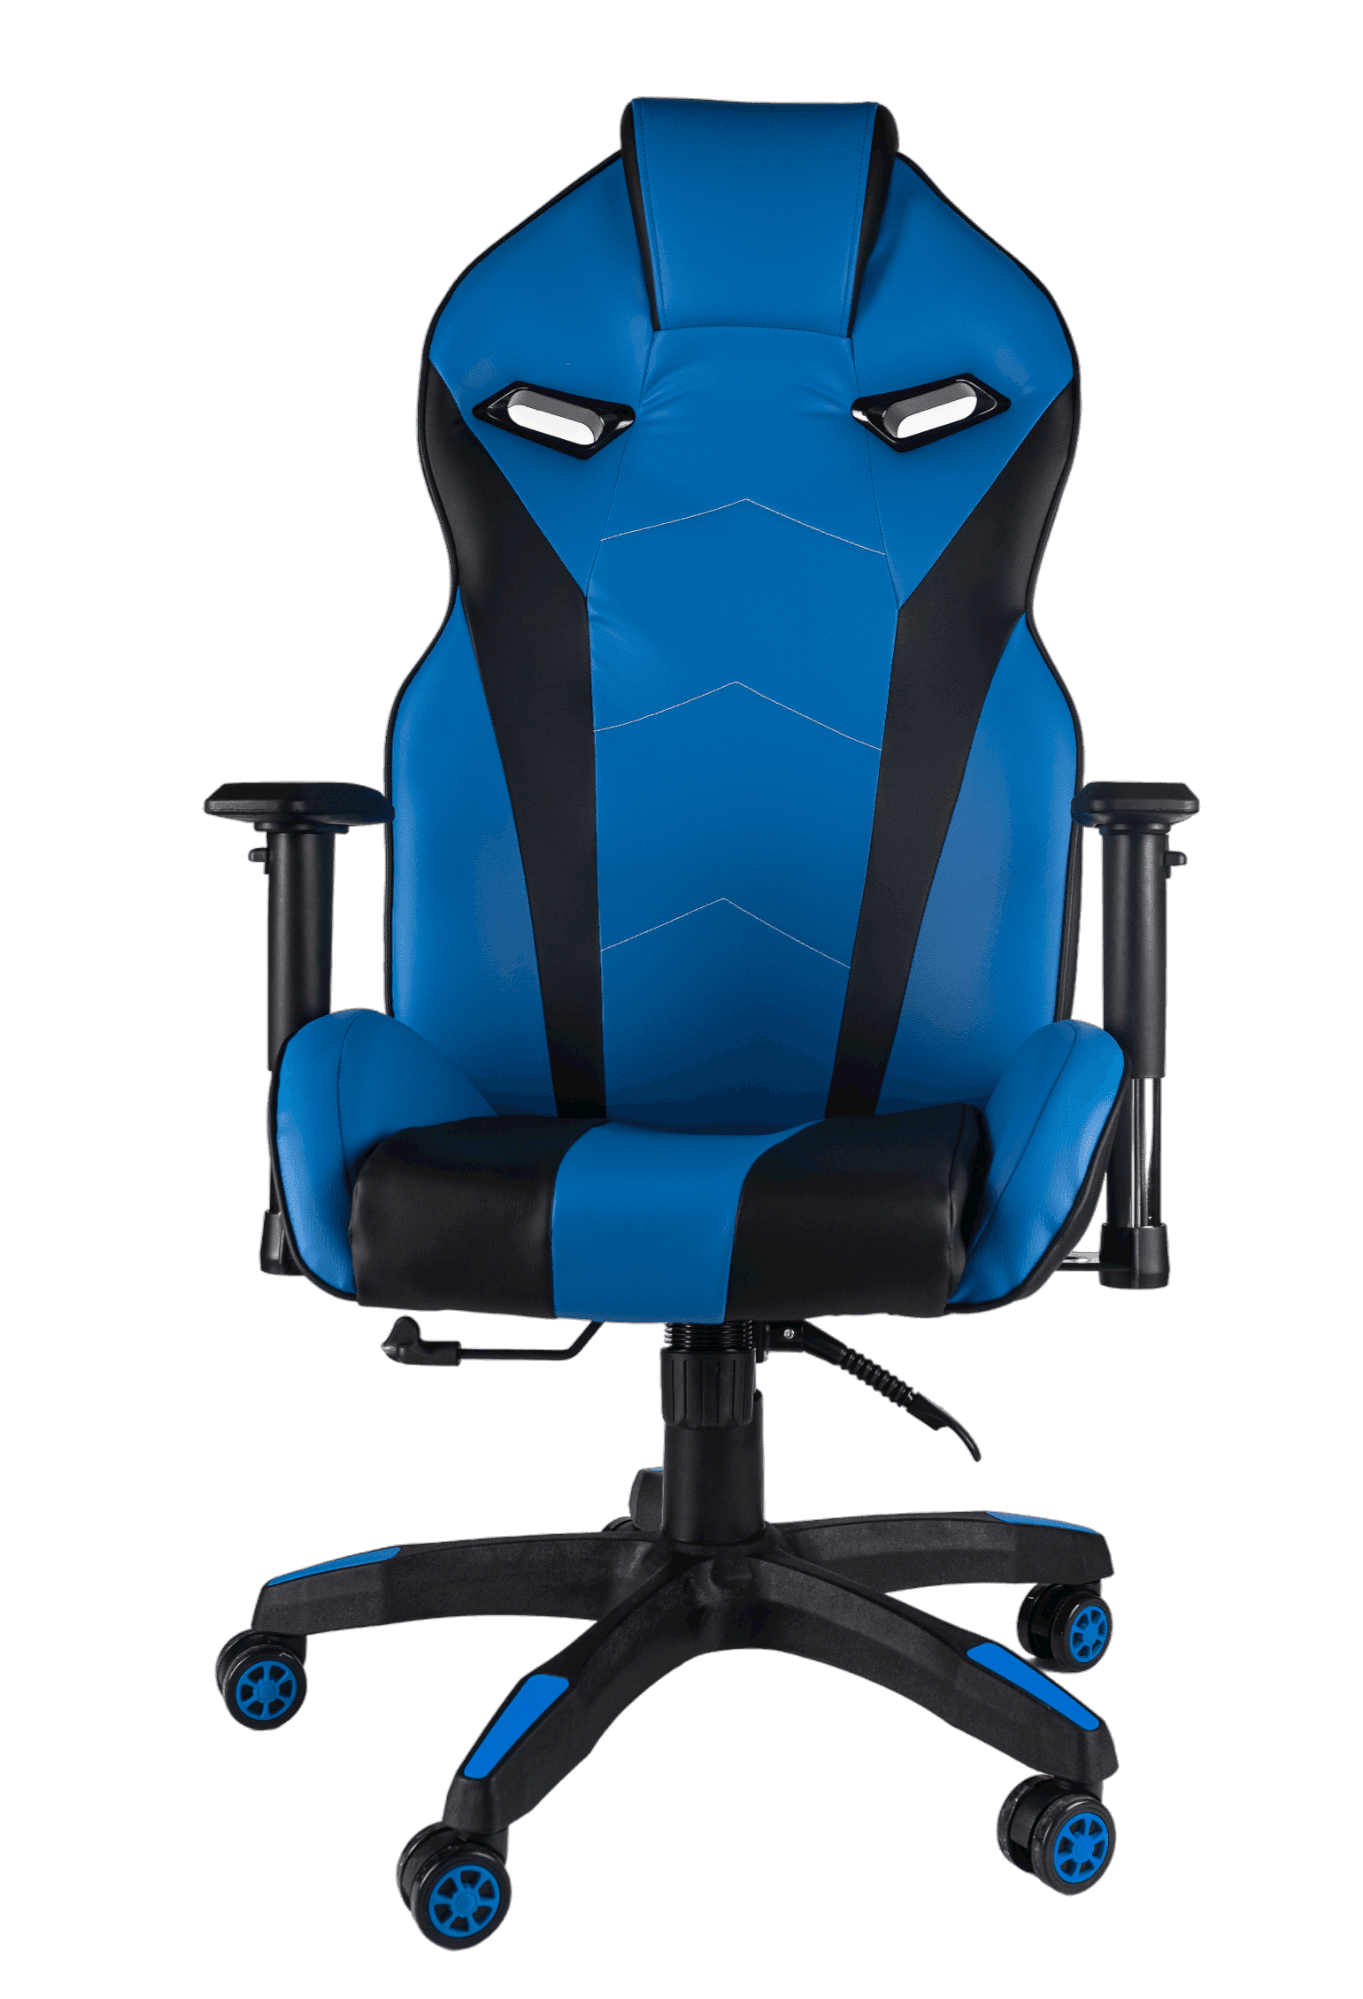 Gejmersko/kancelarijska stolica crno-plava